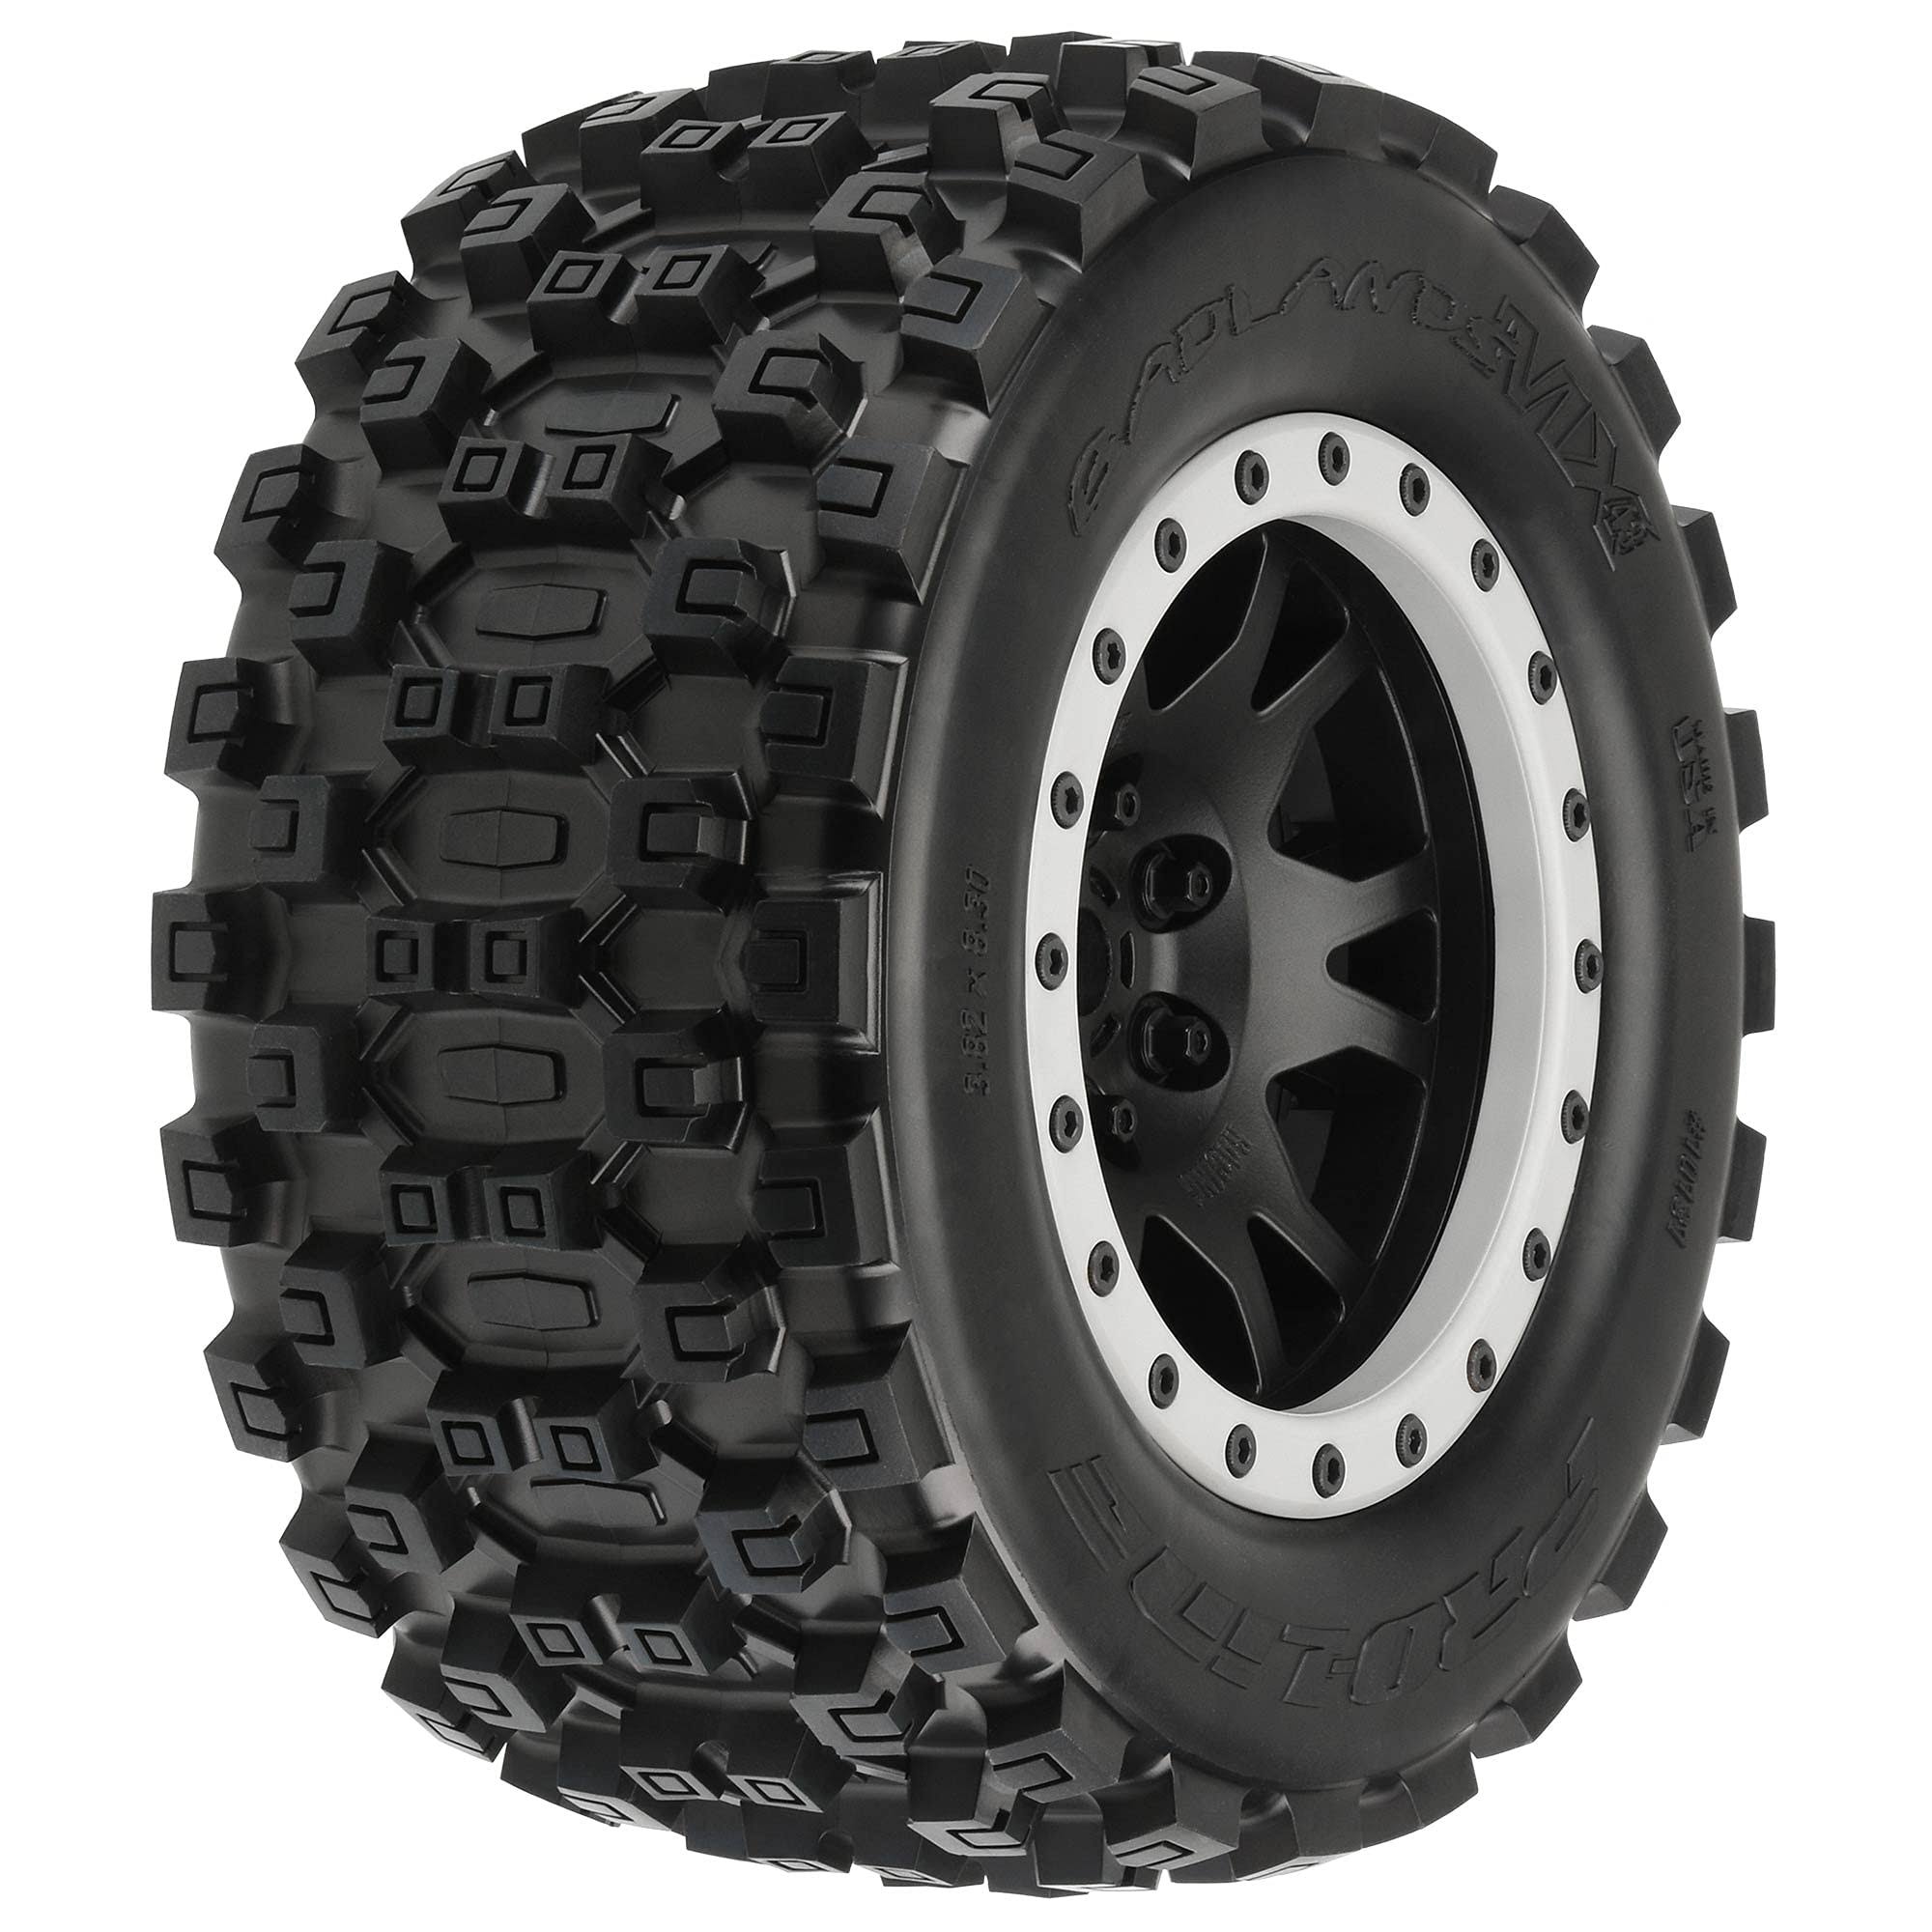 Pro-Line Badlands MX43 Pro-Loc All Terrain Tires - x2